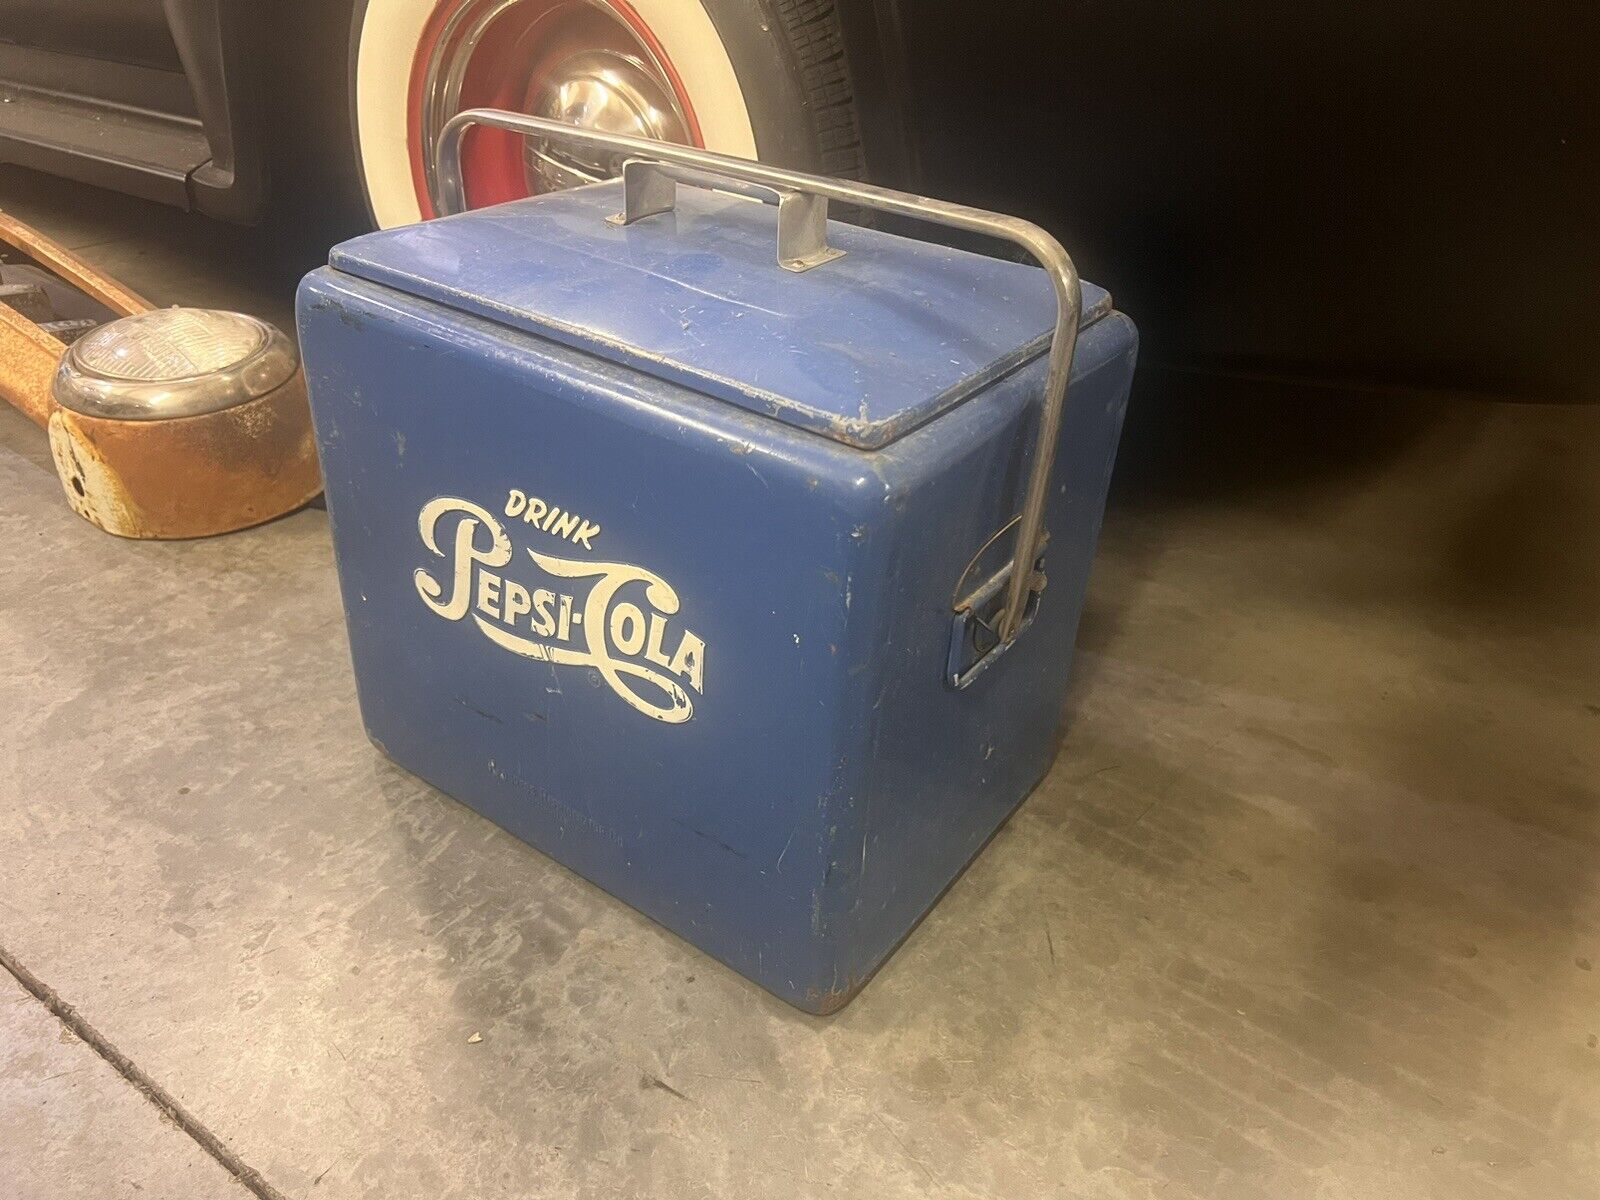 Vintage Retro Metal Blue Drink Pepsi Cola Cooler  1950s